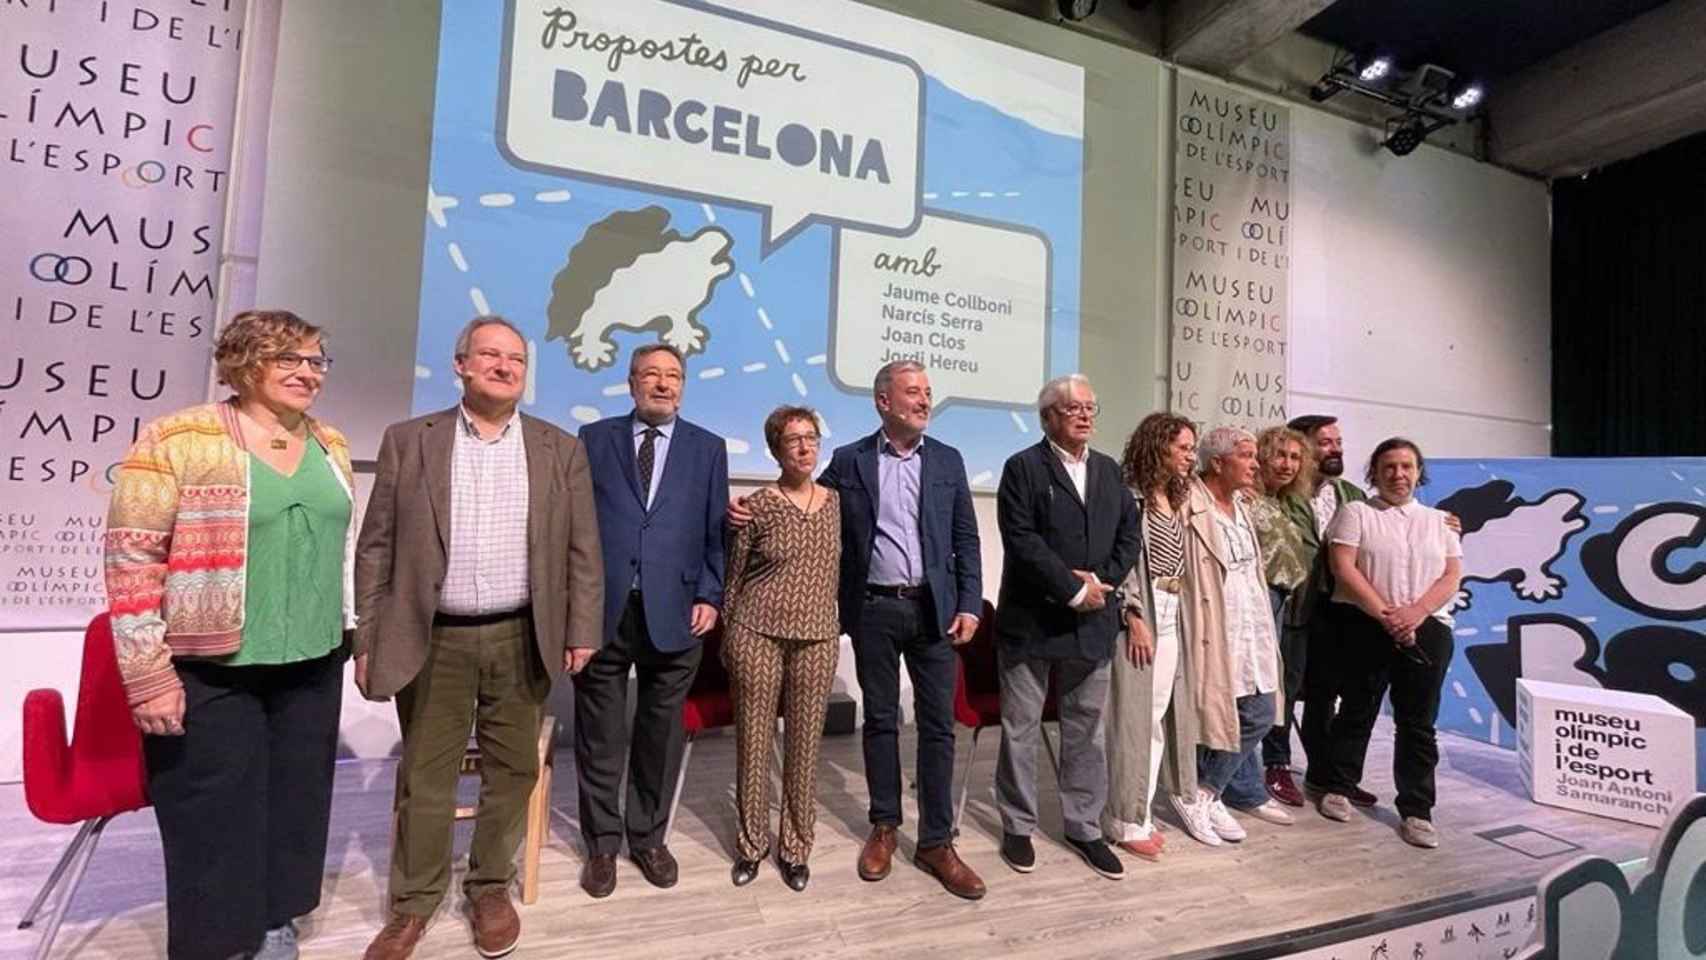 El candidato del PSC a la alcaldía de Barcelona, Jaume Collboni, junto a los exalcaldes socialistas Narcís Serra, Joan Clos y Jordi Hereu / EUROPA PRESS